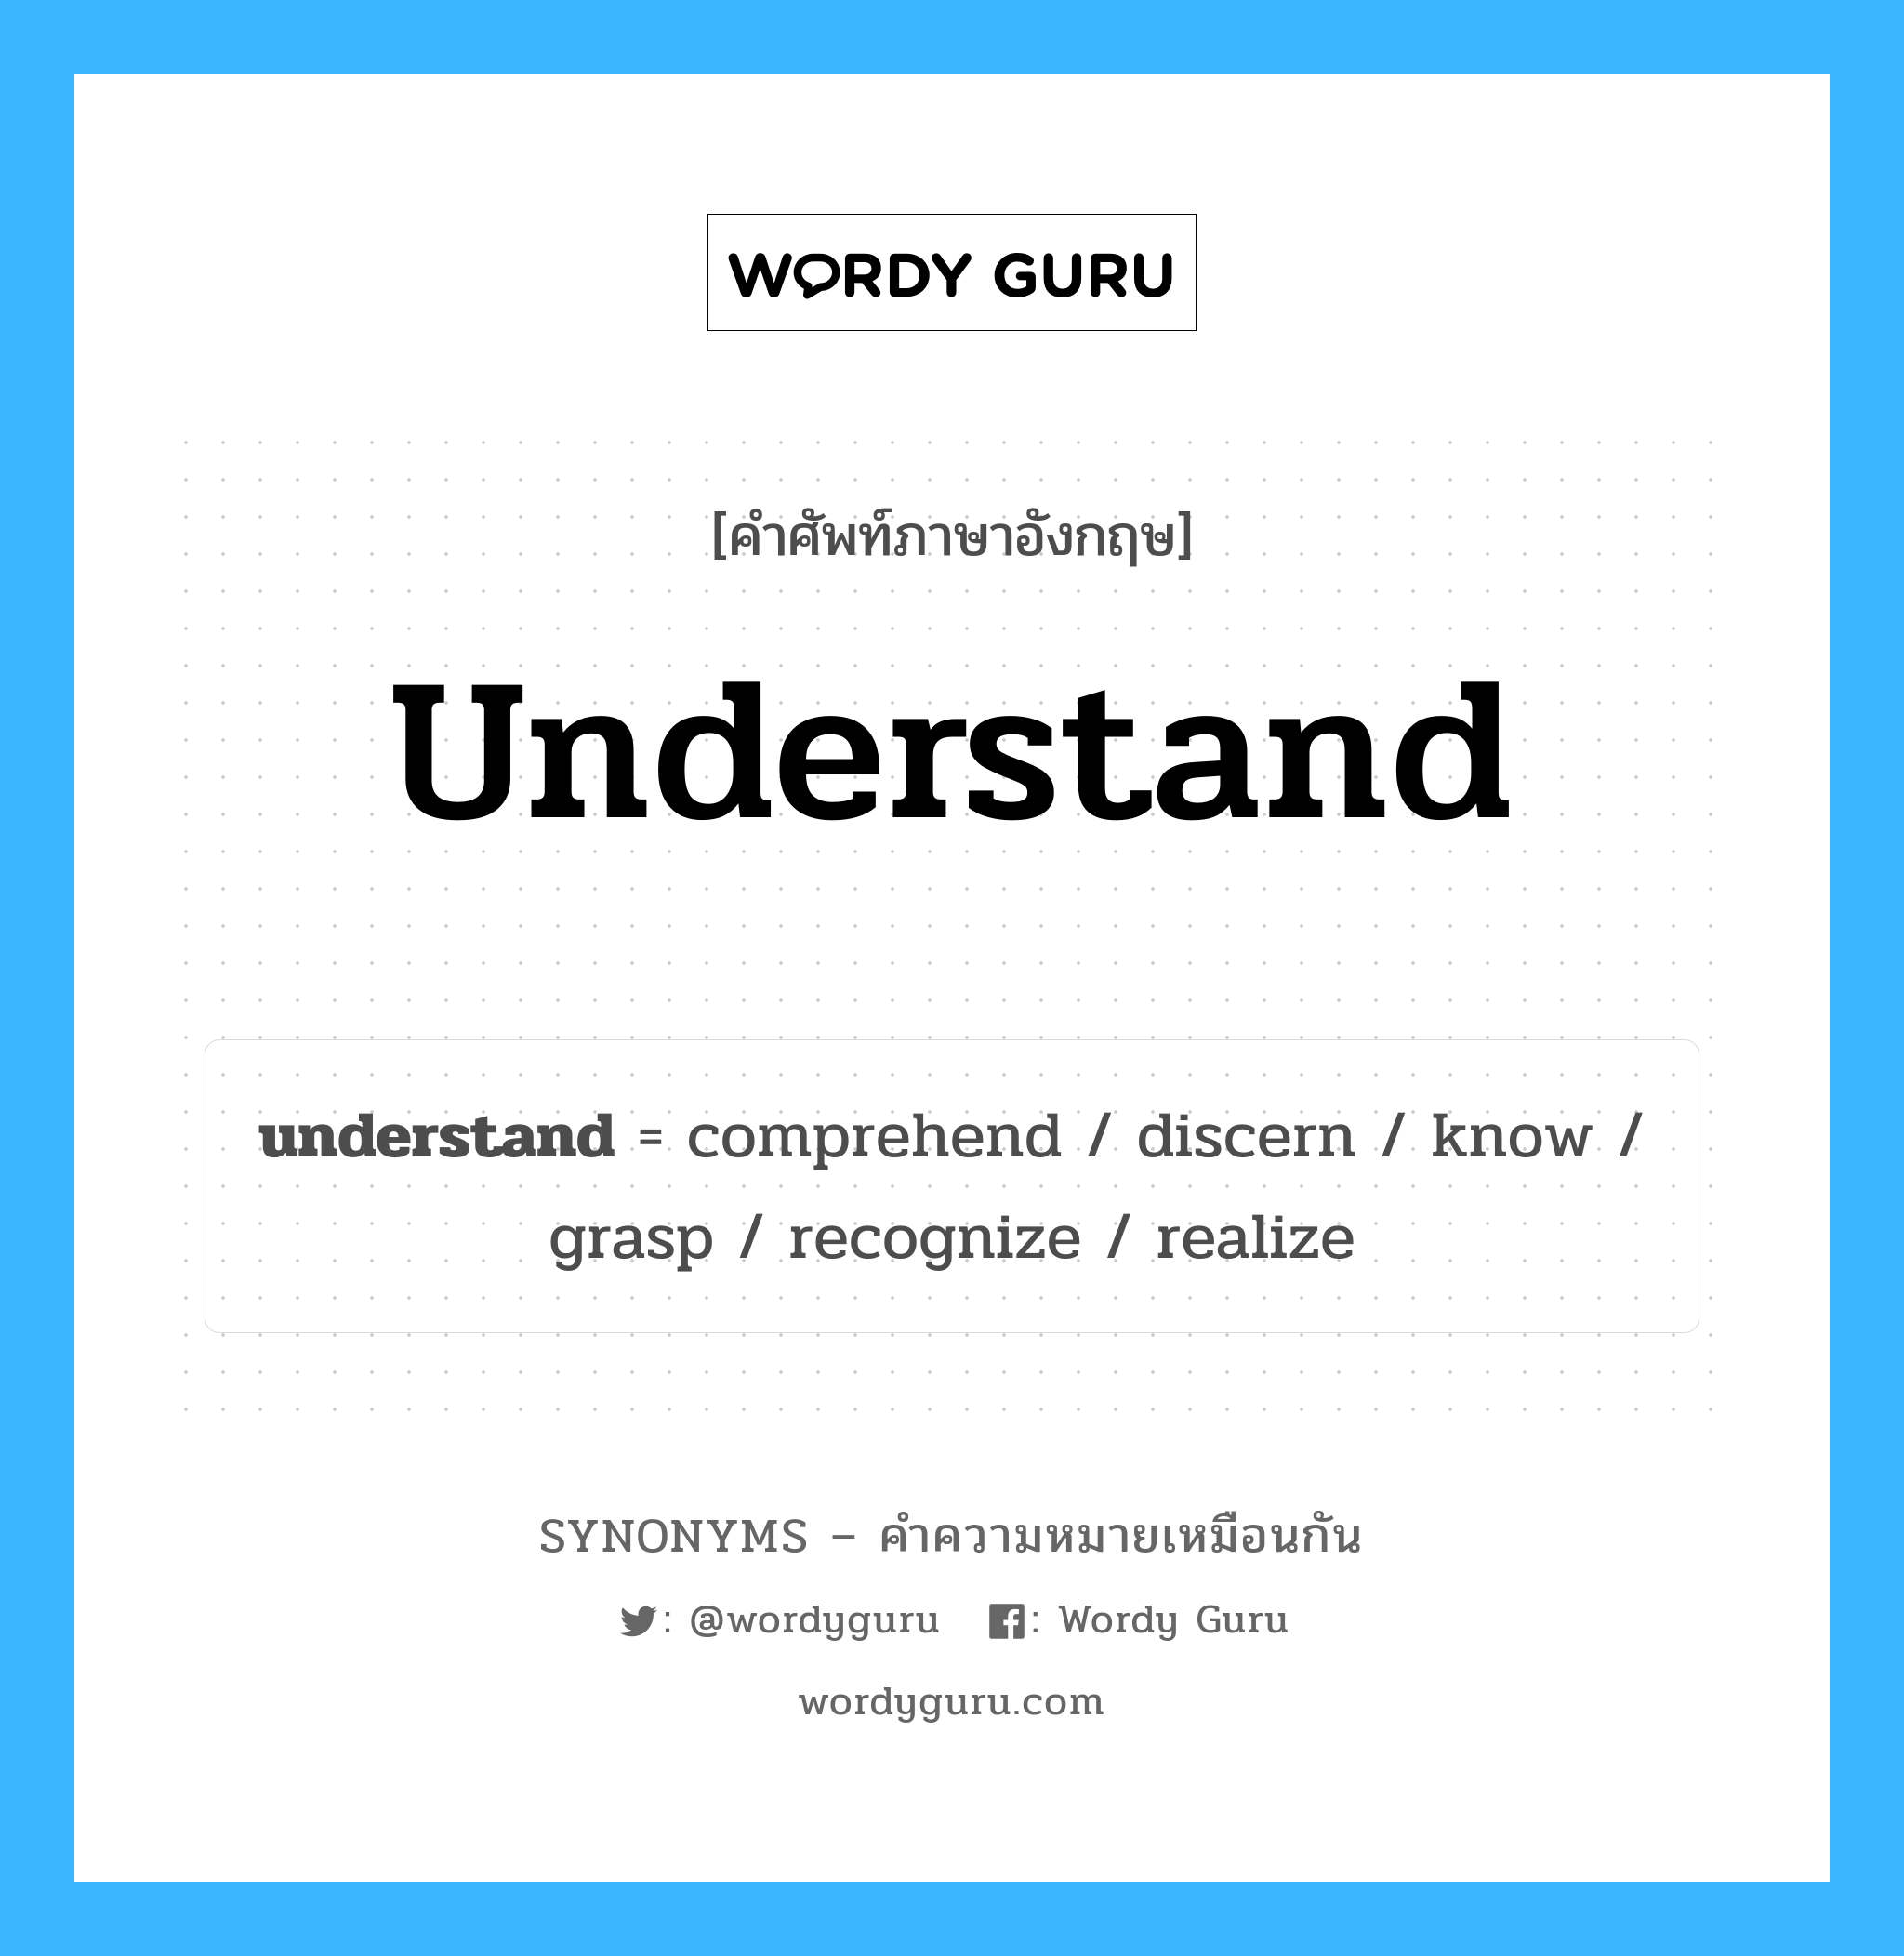 understand เป็นหนึ่งใน grasp และมีคำอื่น ๆ อีกดังนี้, คำศัพท์ภาษาอังกฤษ understand ความหมายคล้ายกันกับ grasp แปลว่า มีความเข้าใจ หมวด grasp